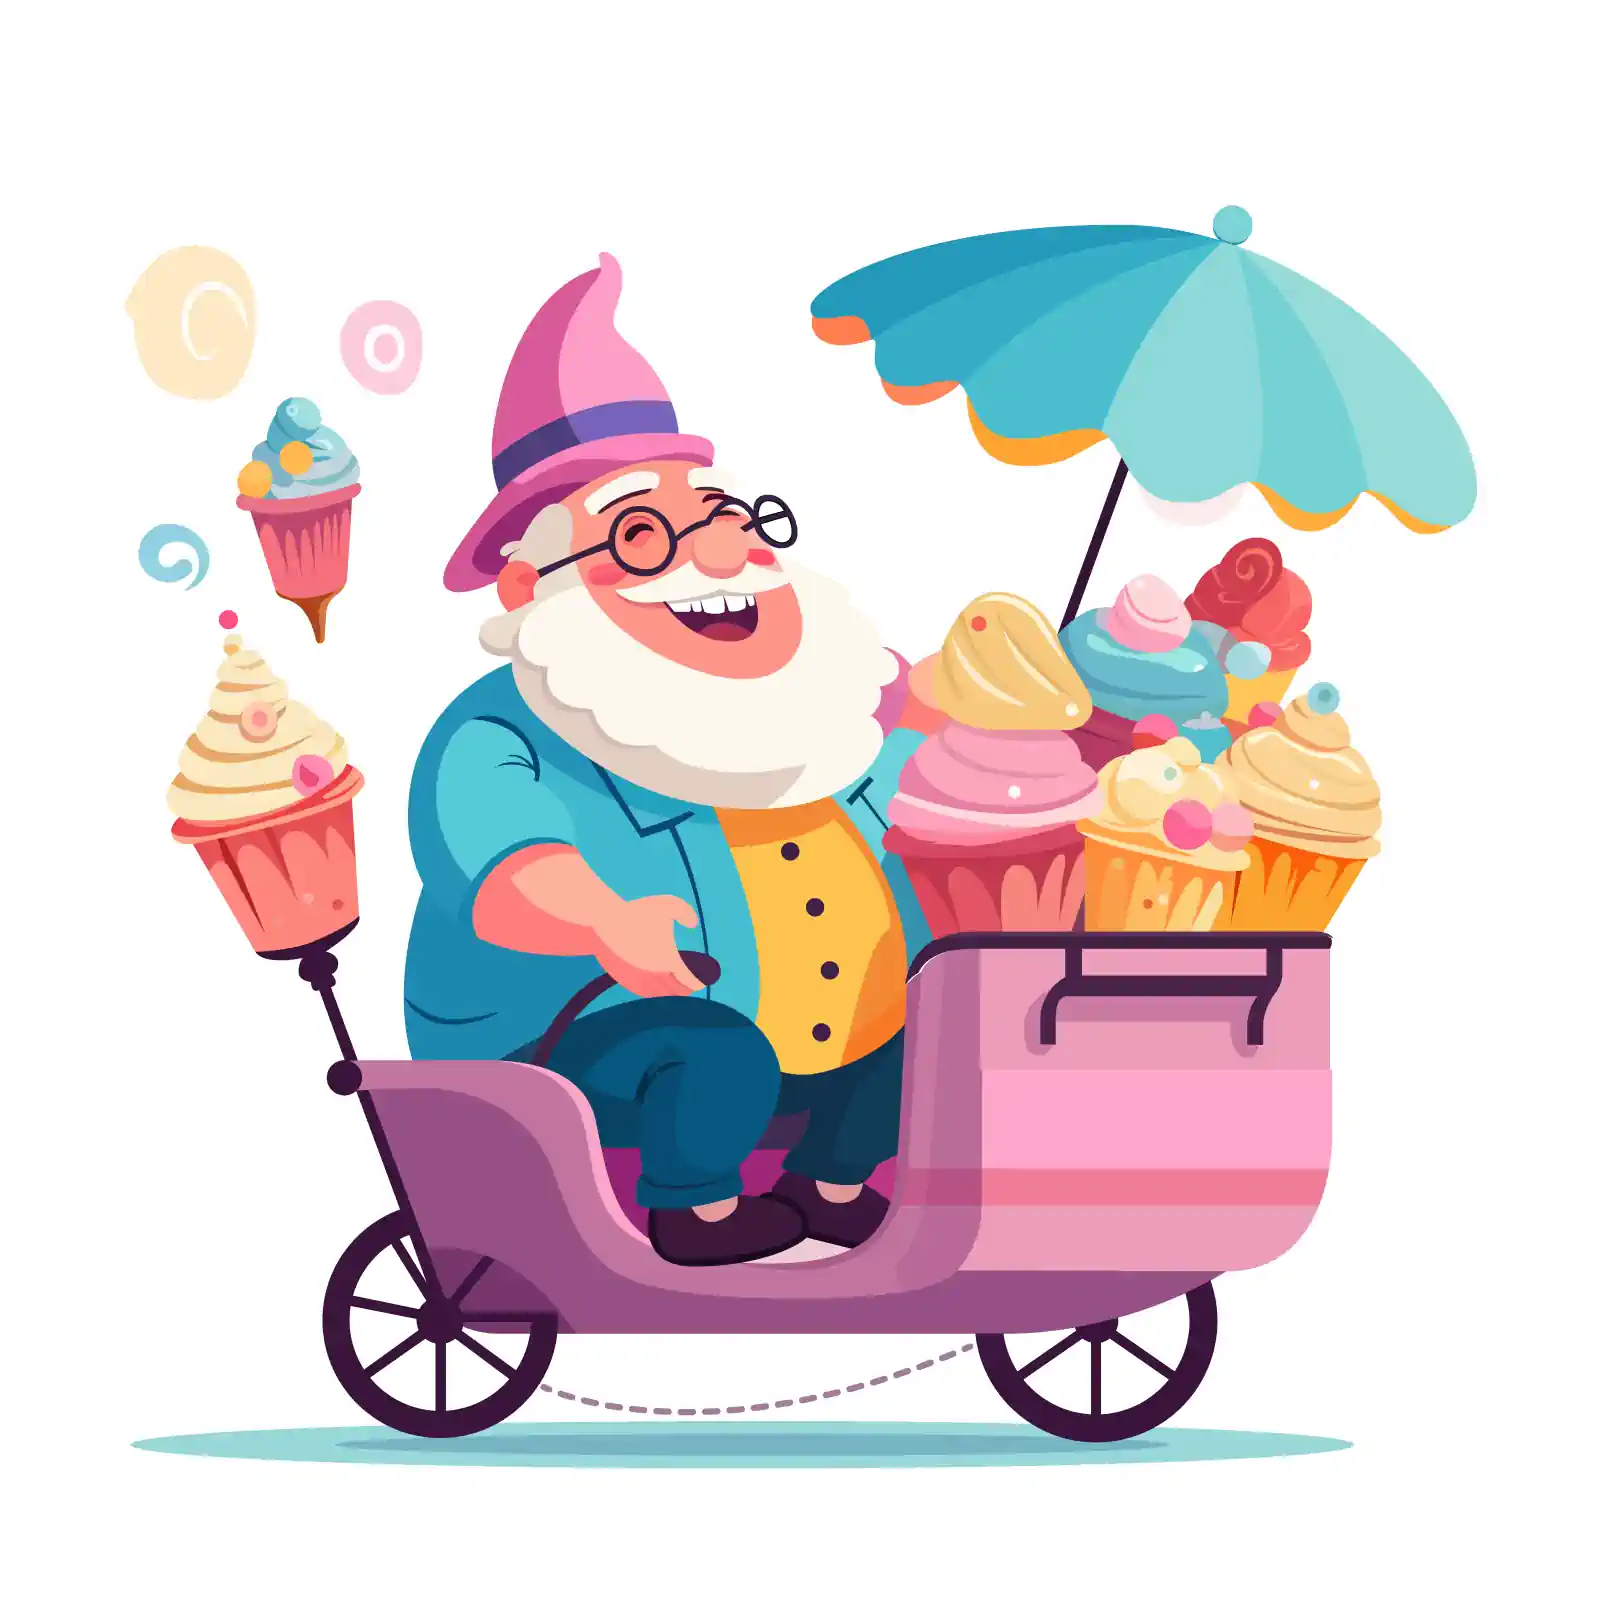 Ice cream seller on a bike